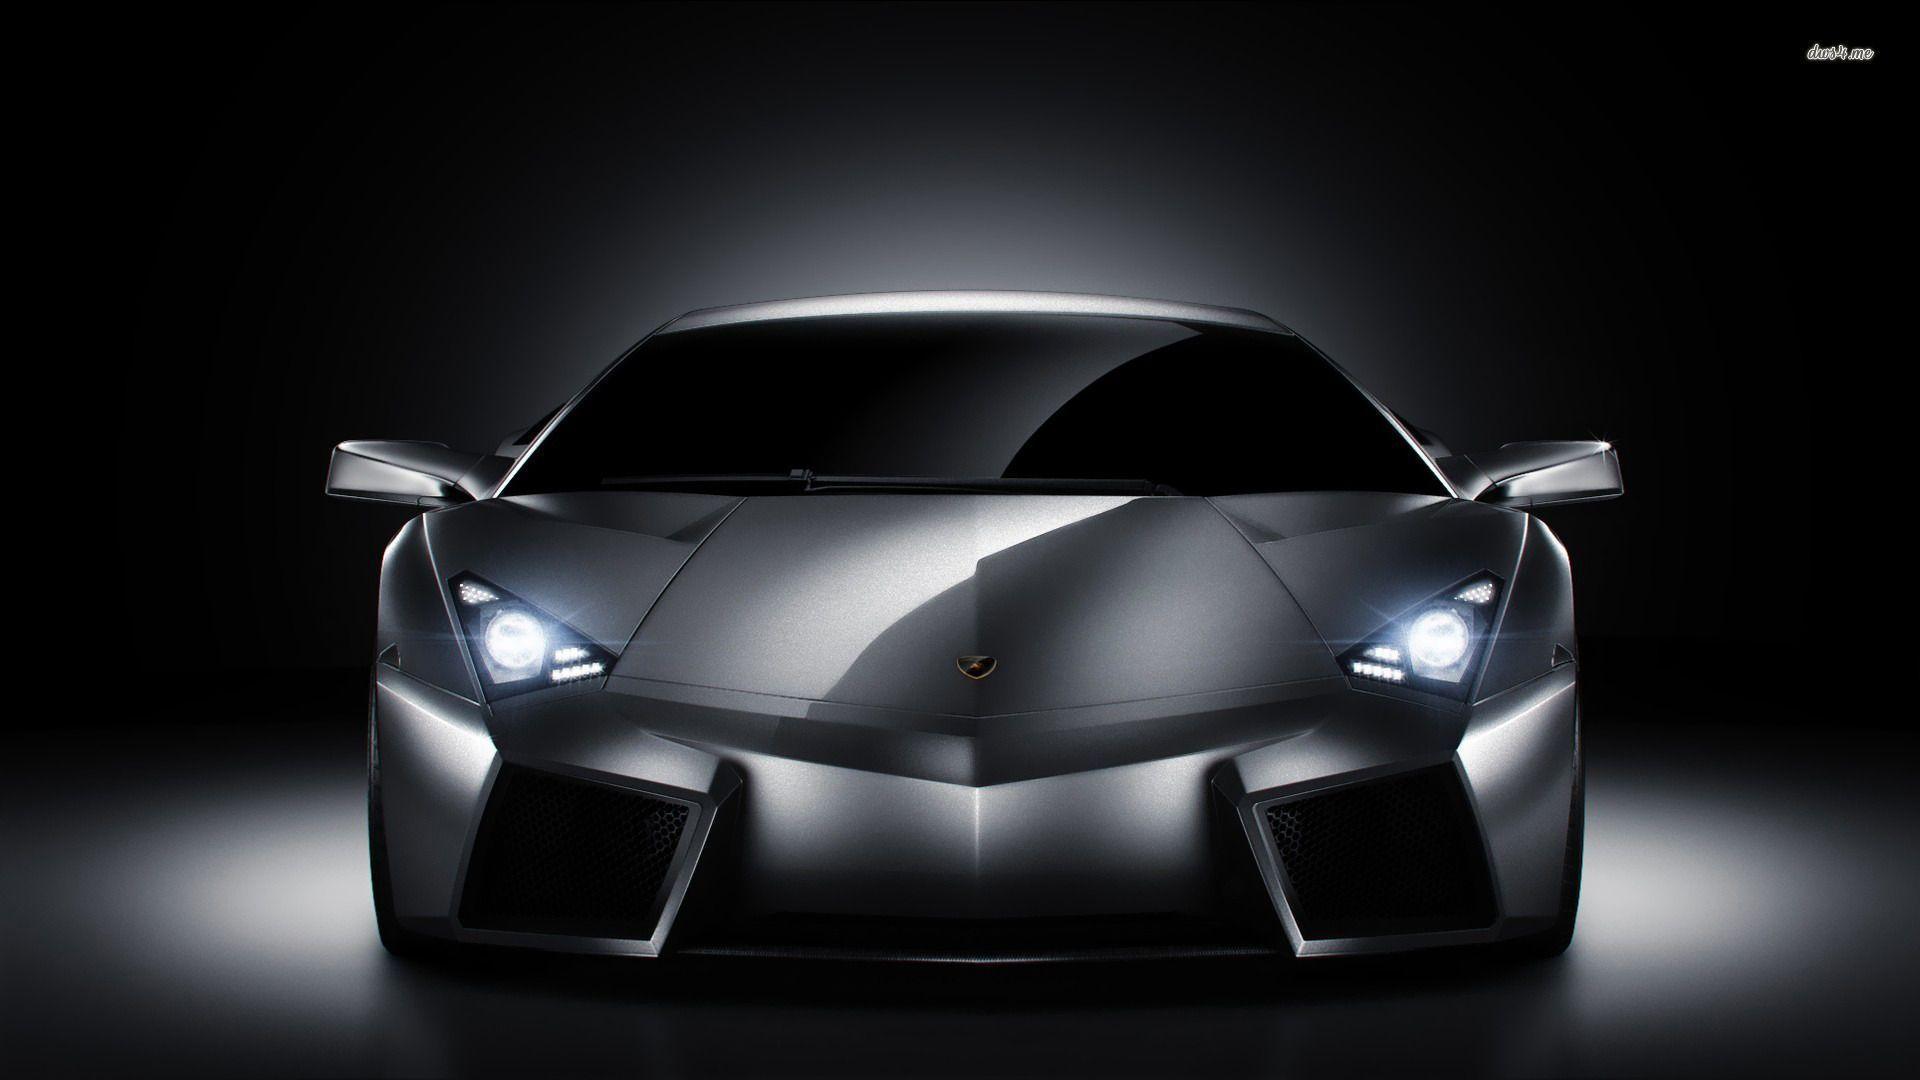 Sport Cars Lamborghini Reventon and Scared To Try Auto Repair? Use